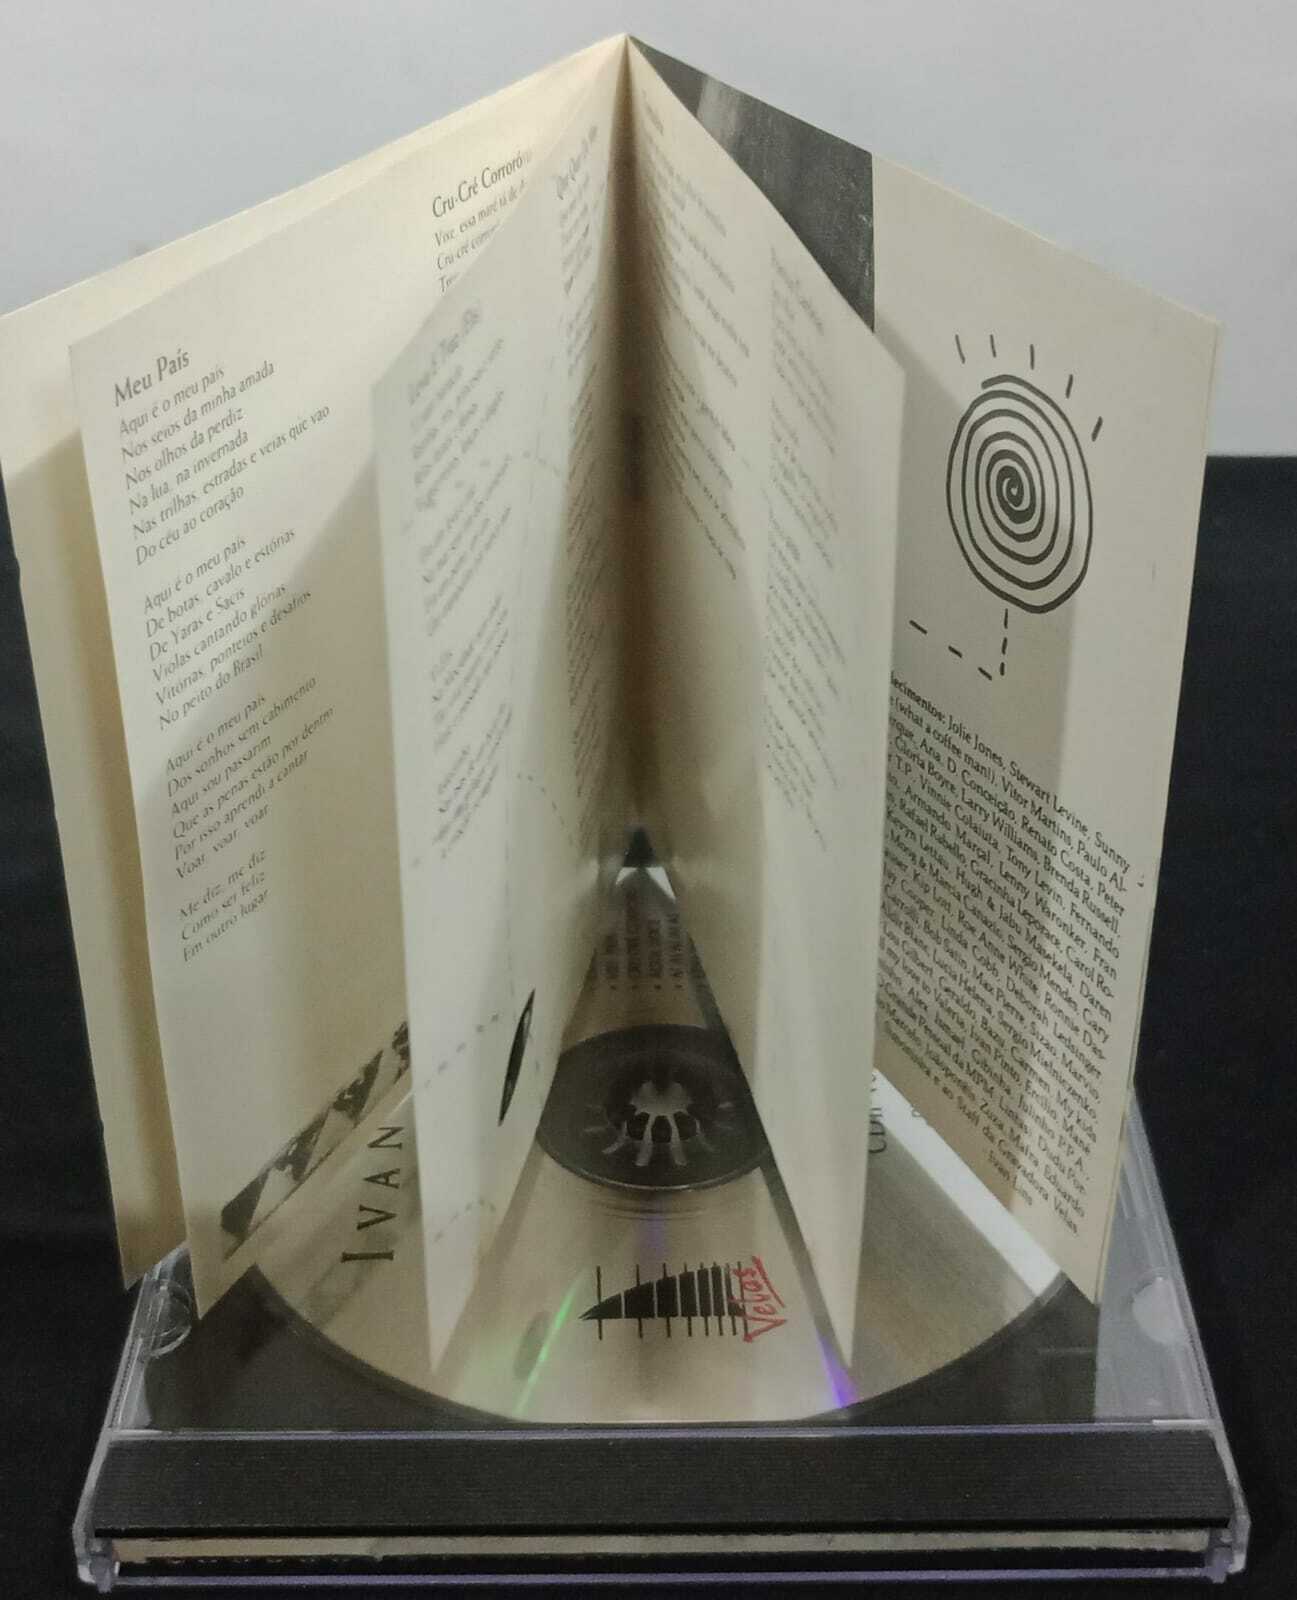 CD - Ivan Lins - Awa Yiô